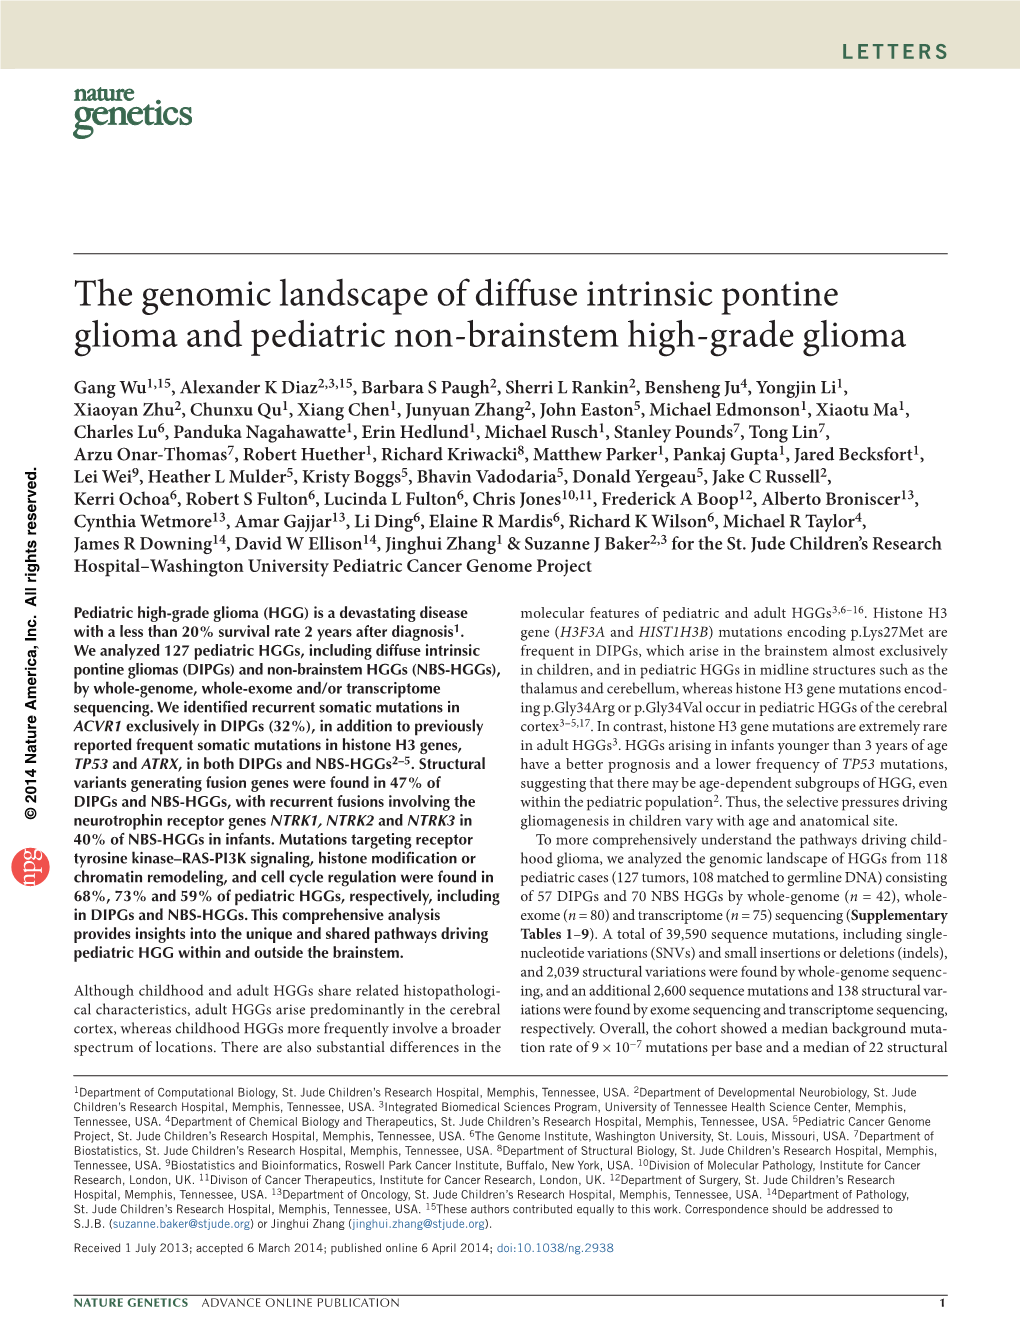 The Genomic Landscape of Diffuse Intrinsic Pontine Glioma And